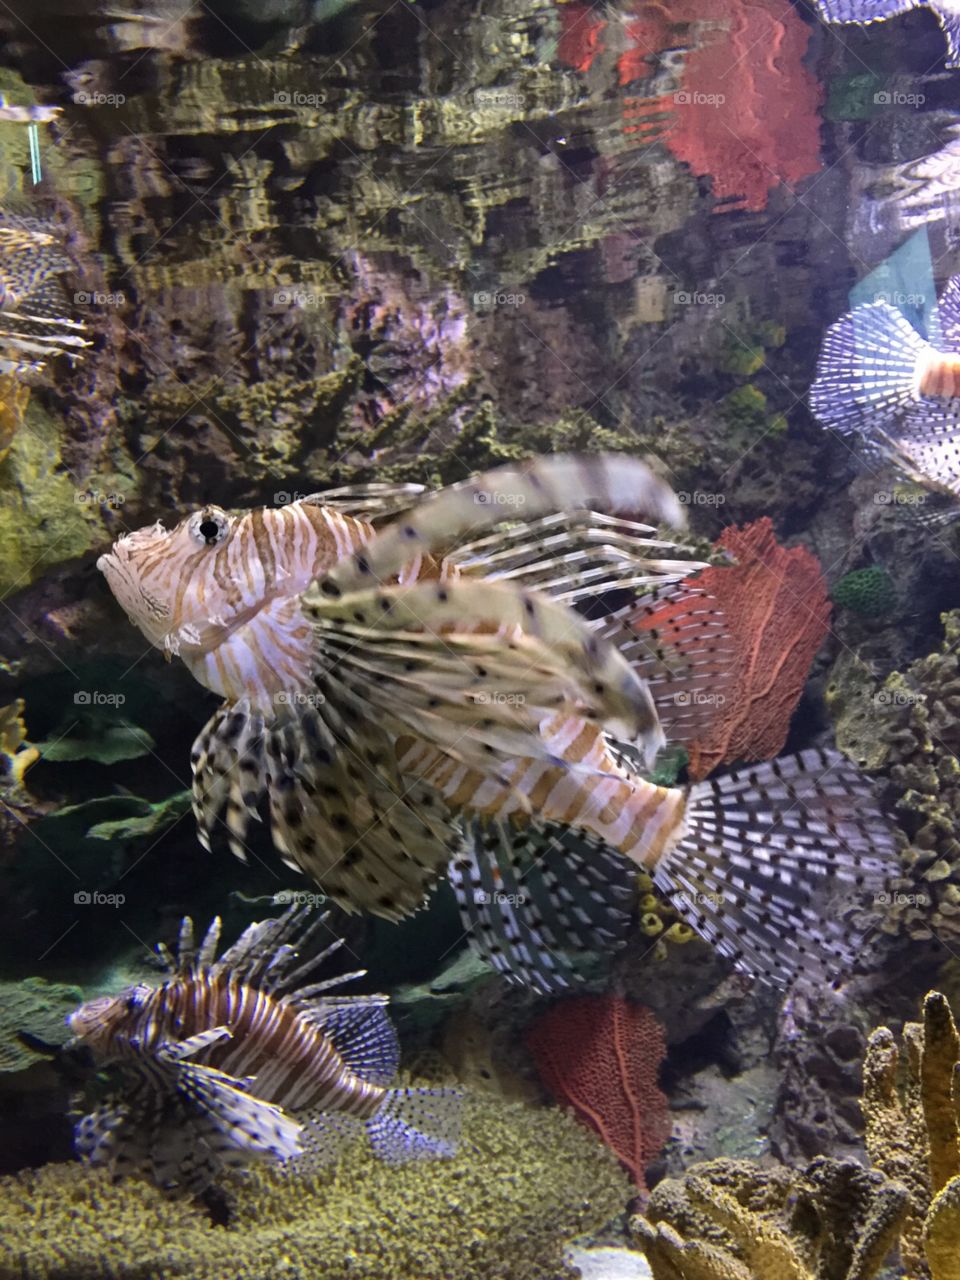 Ripley's Aquarium downtown Tor. I think this fish is beautiful